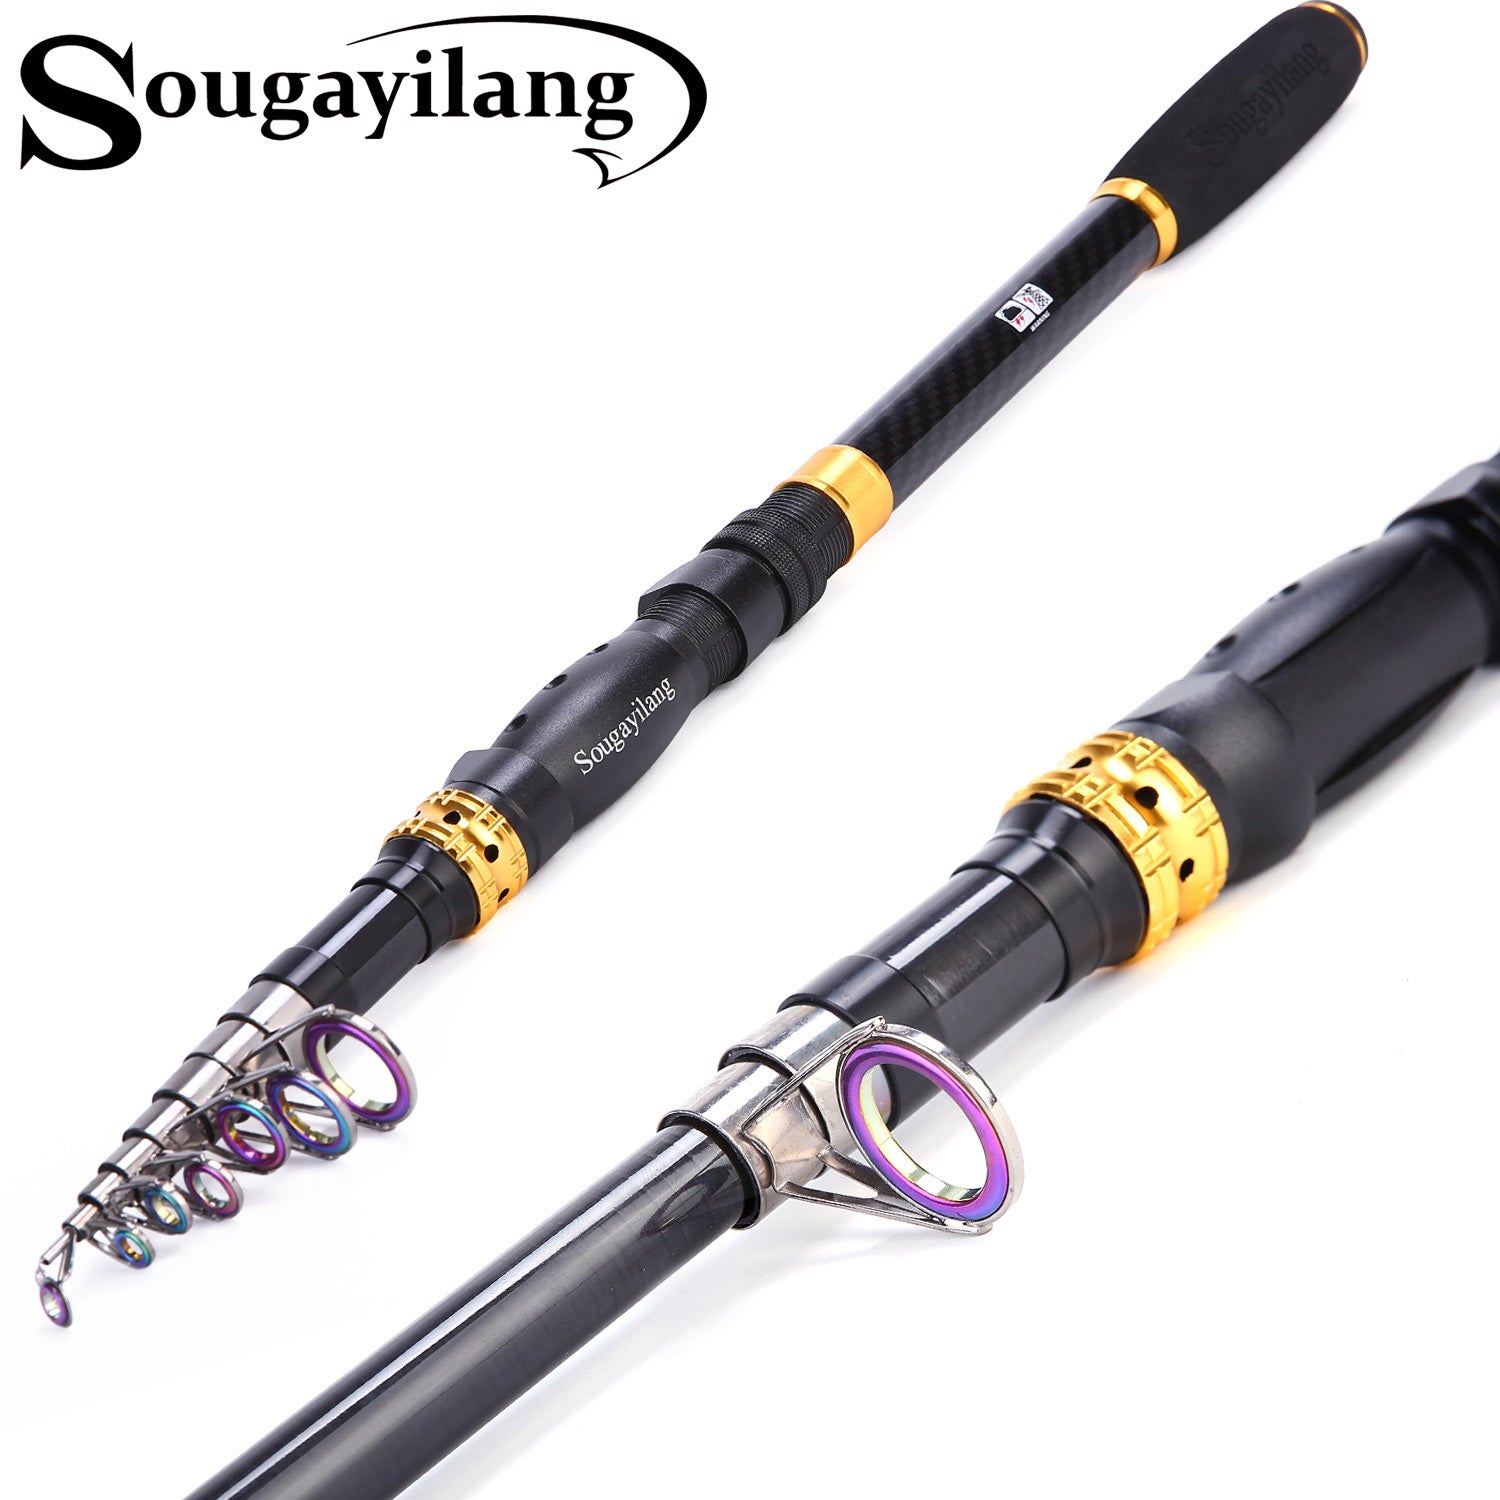 Sougayilang Carp Fishing Rod 3M/3.6M Carbon Fiber Fishing Rod Ultralight  Body Portable Travel Fishing Pole for Carp Fishing Enthusiast Beginner